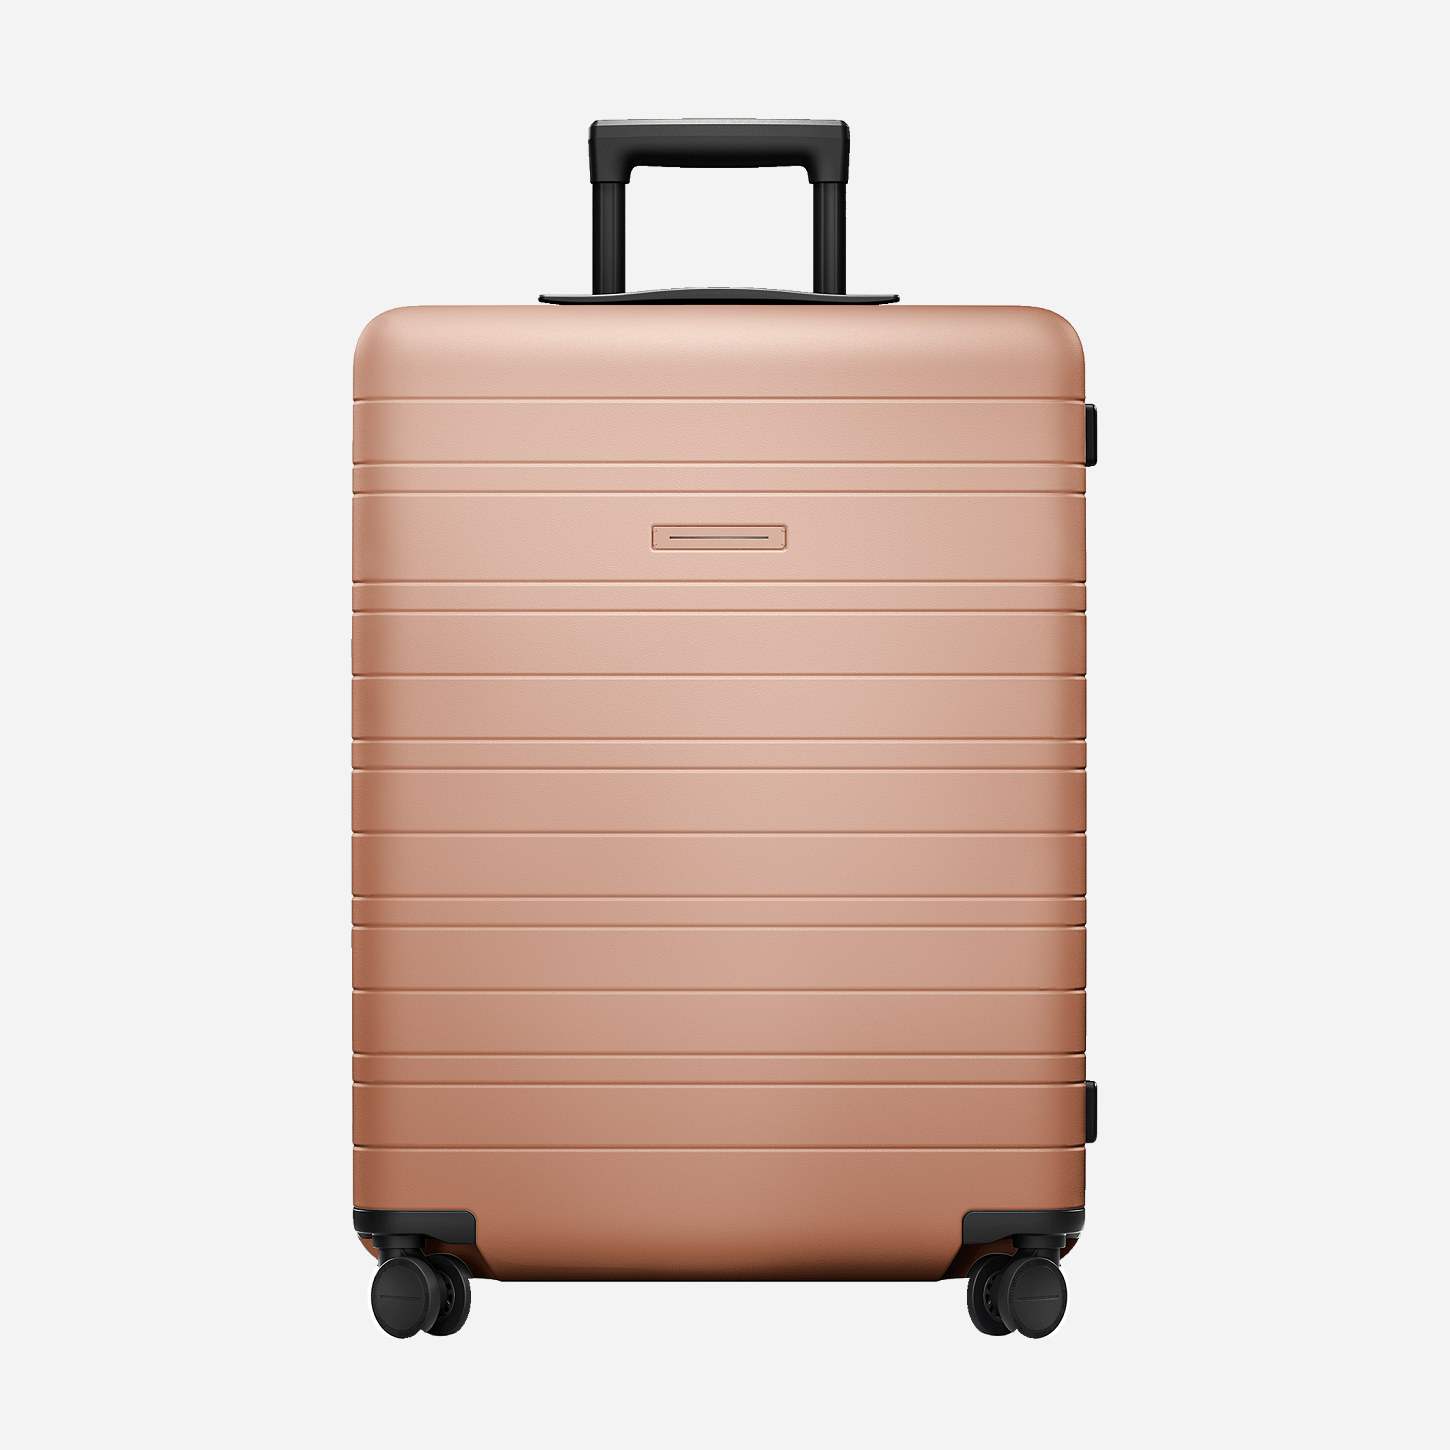 Horizn Studios H6 Check-In Luggage peach color